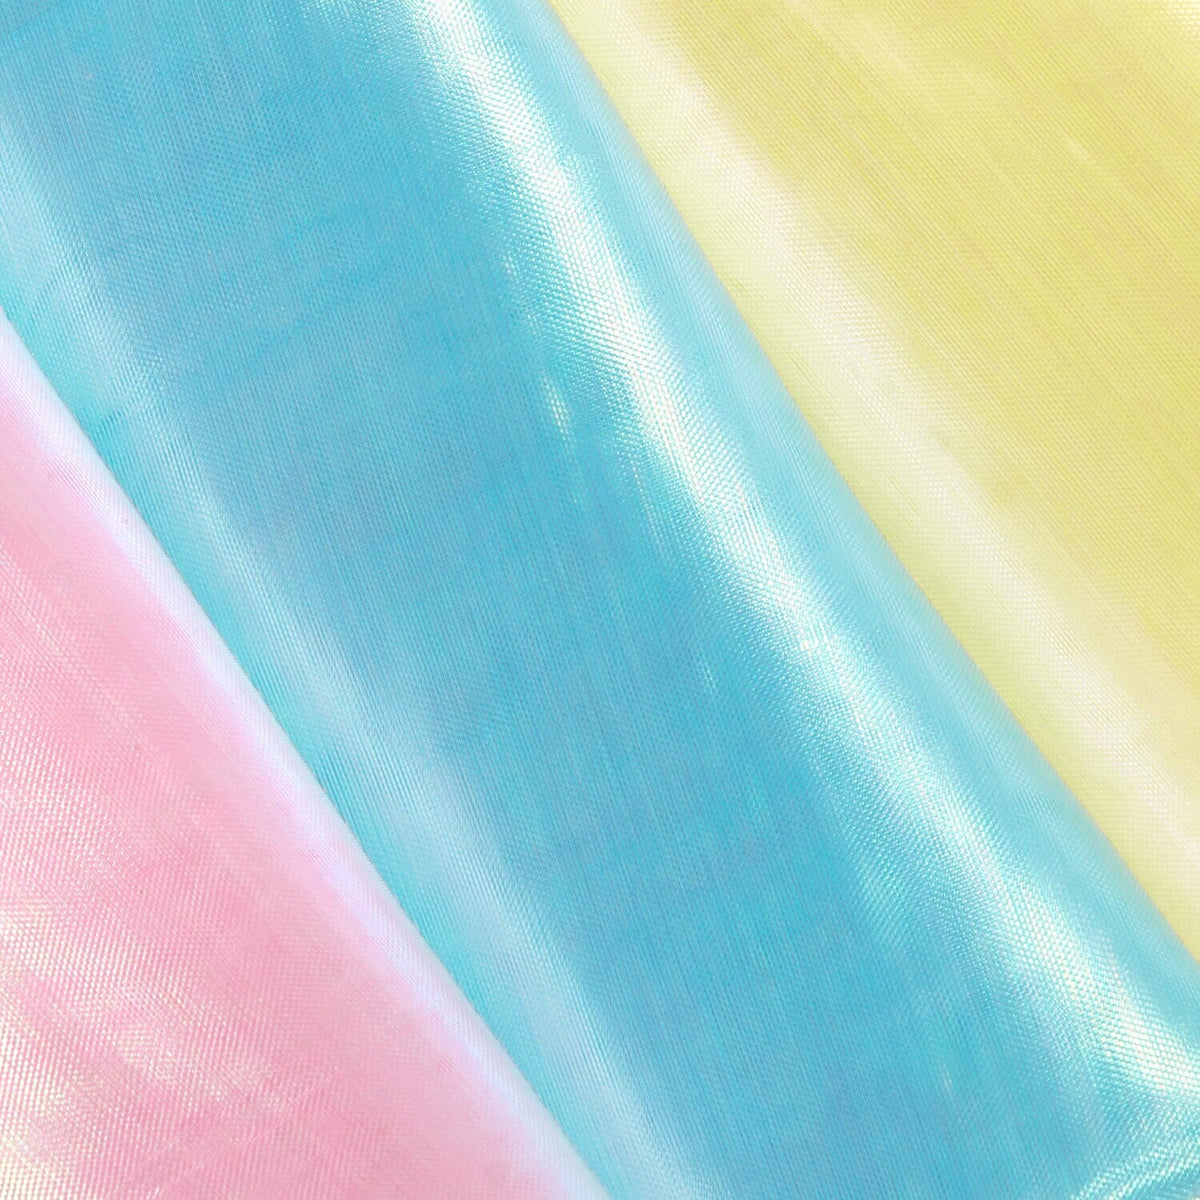 Aqua Woven Translucent/Iridescent Organza Fabric